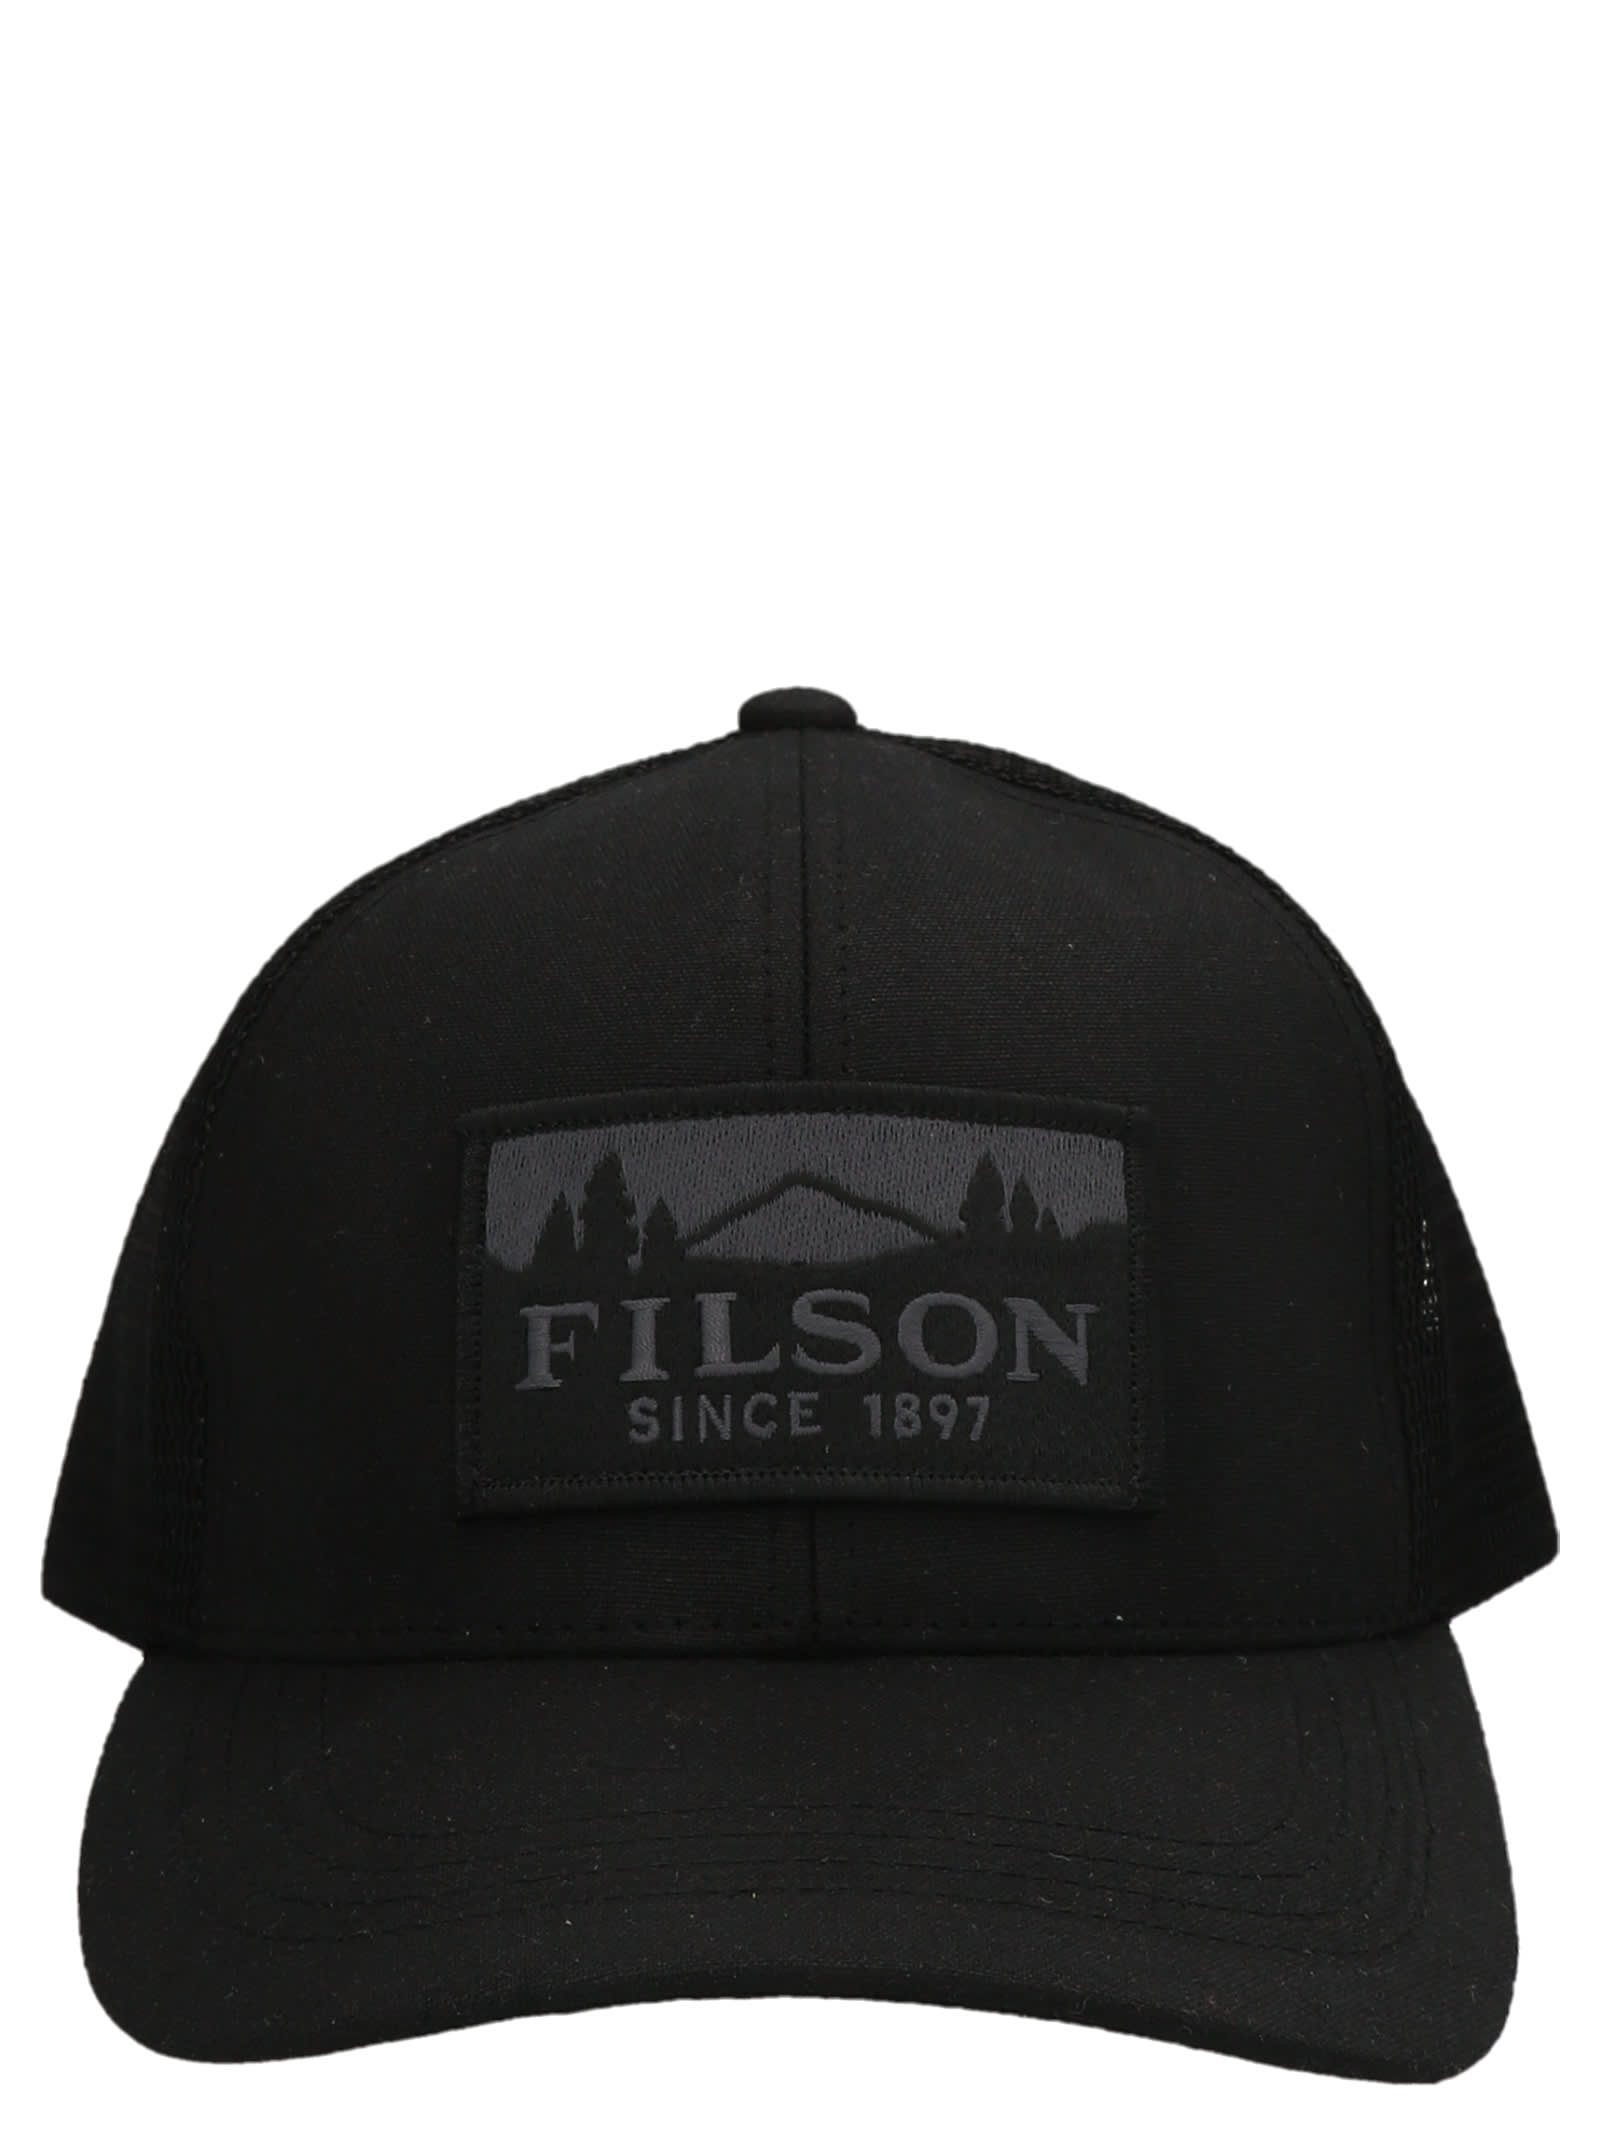 FILSON TRUCKER CAP